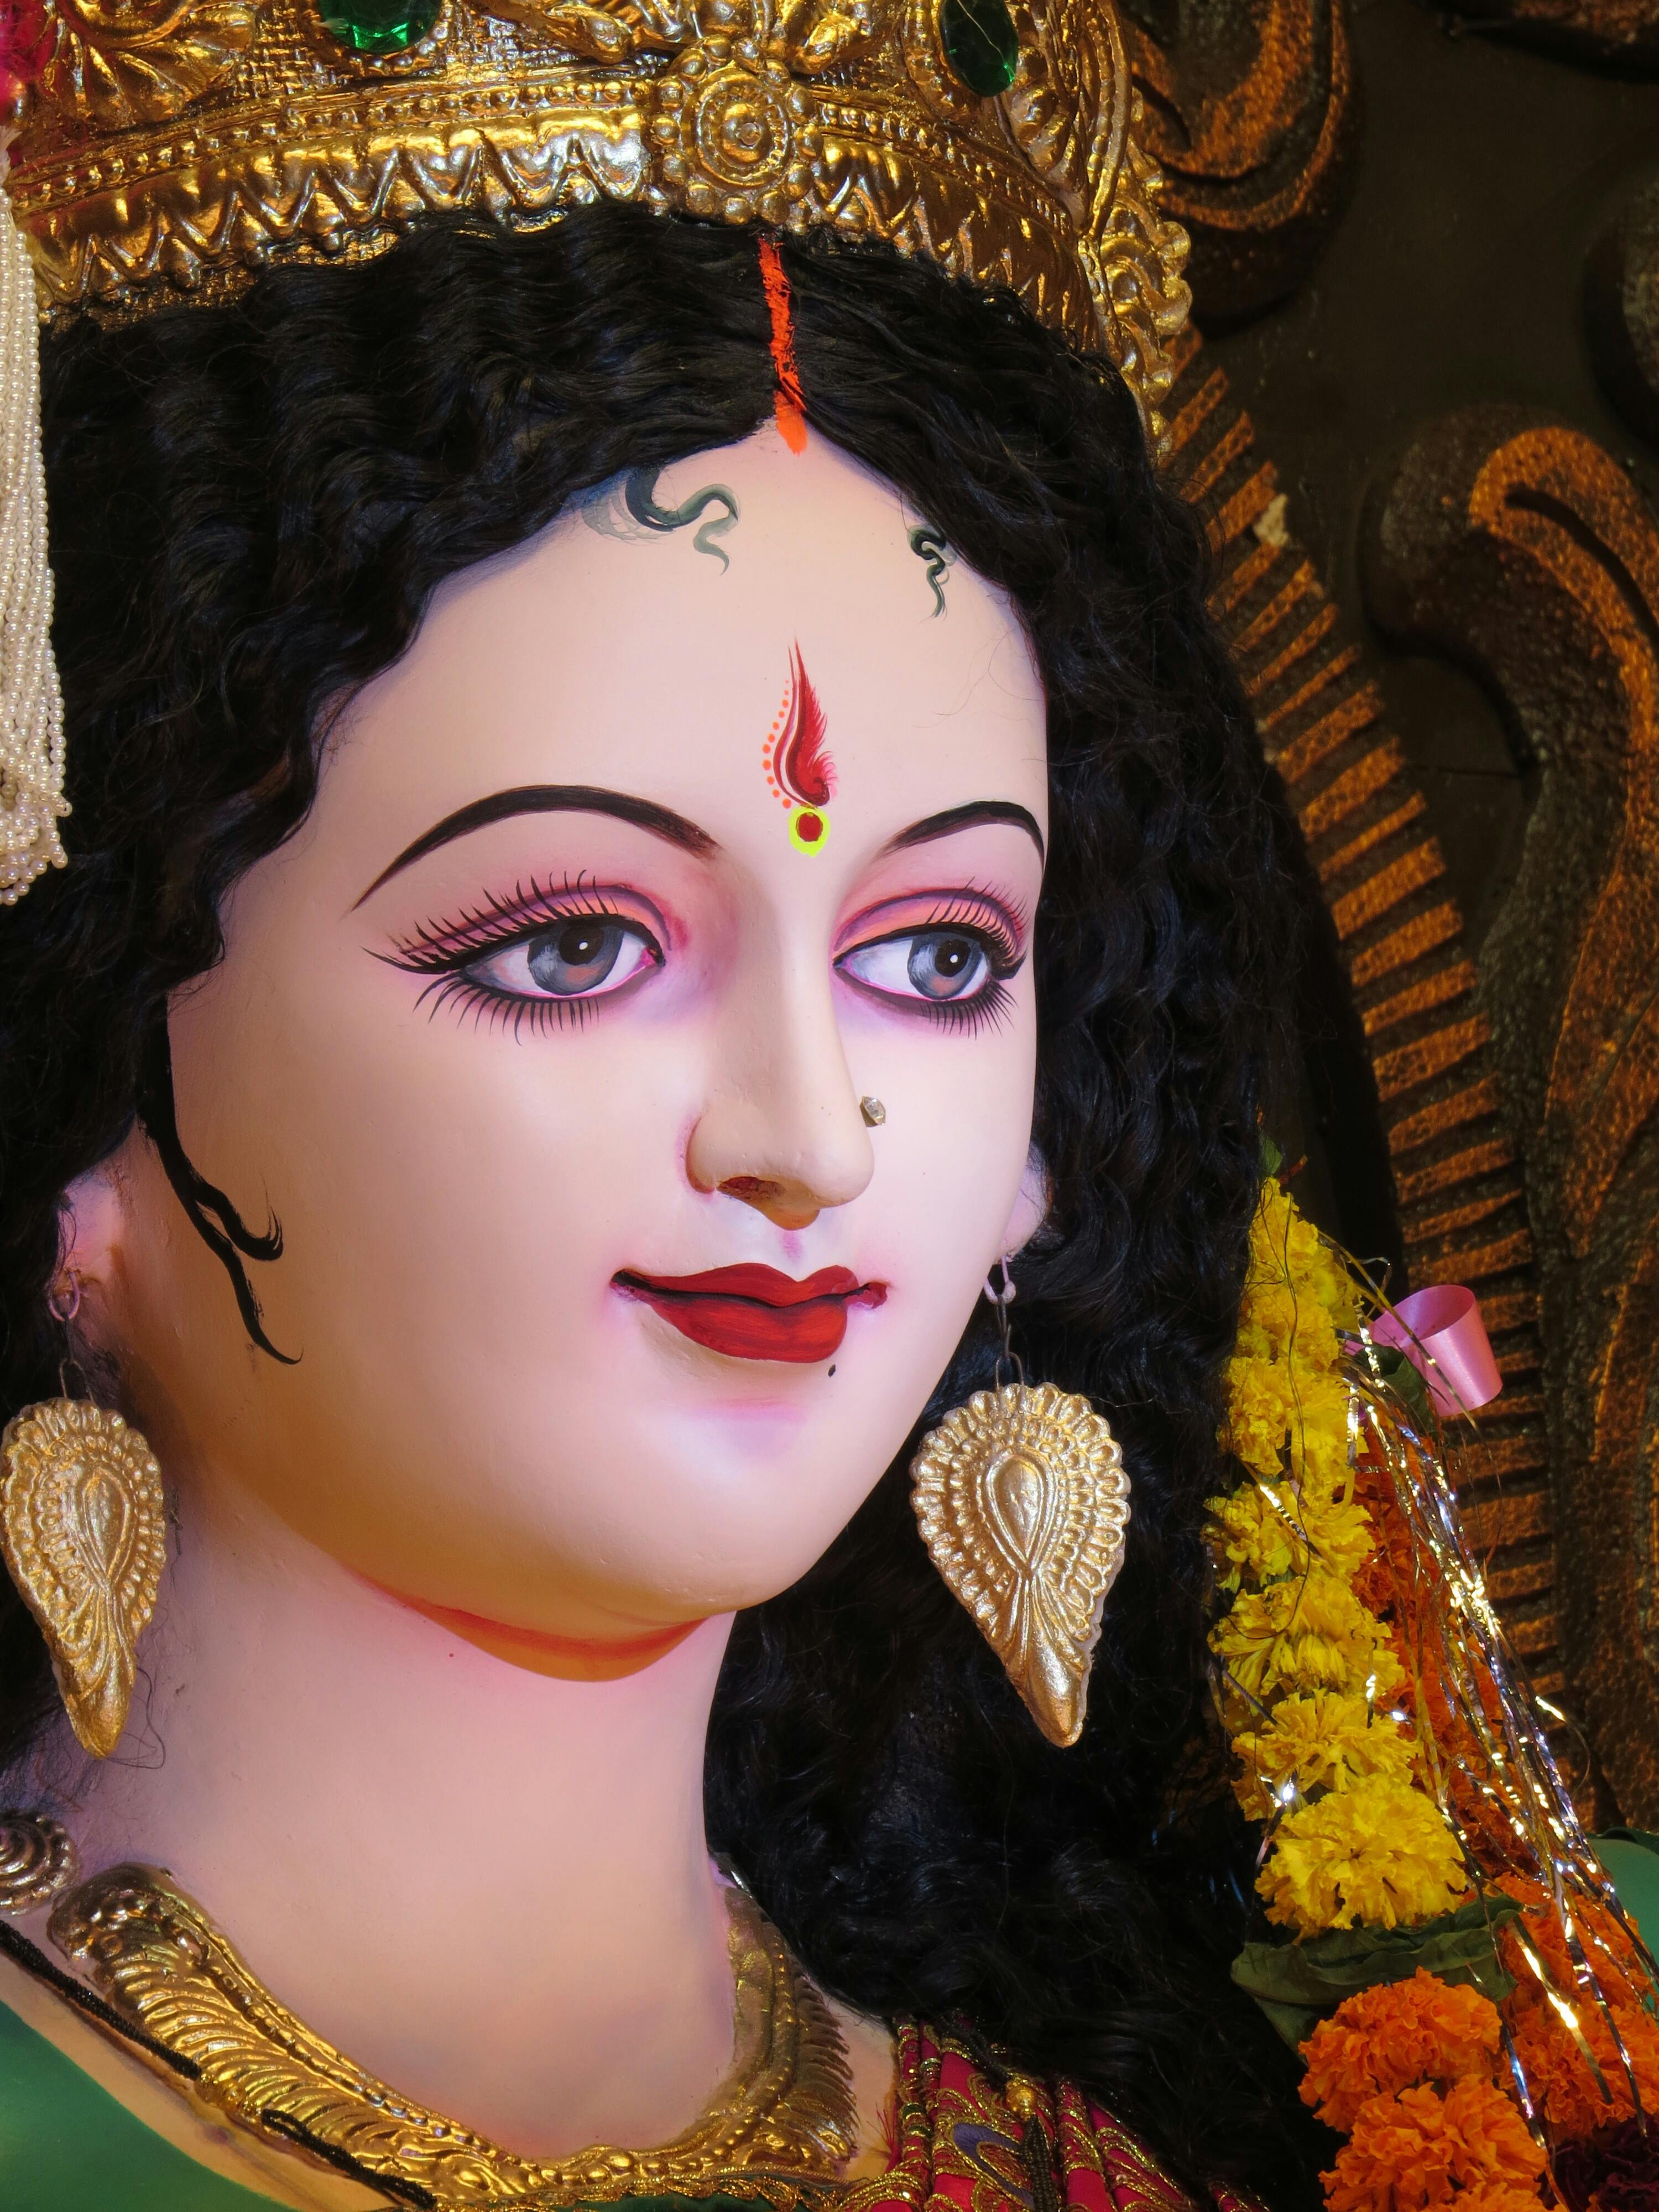 Lakshmi Devi Images HD Wallpaper - Durga Image